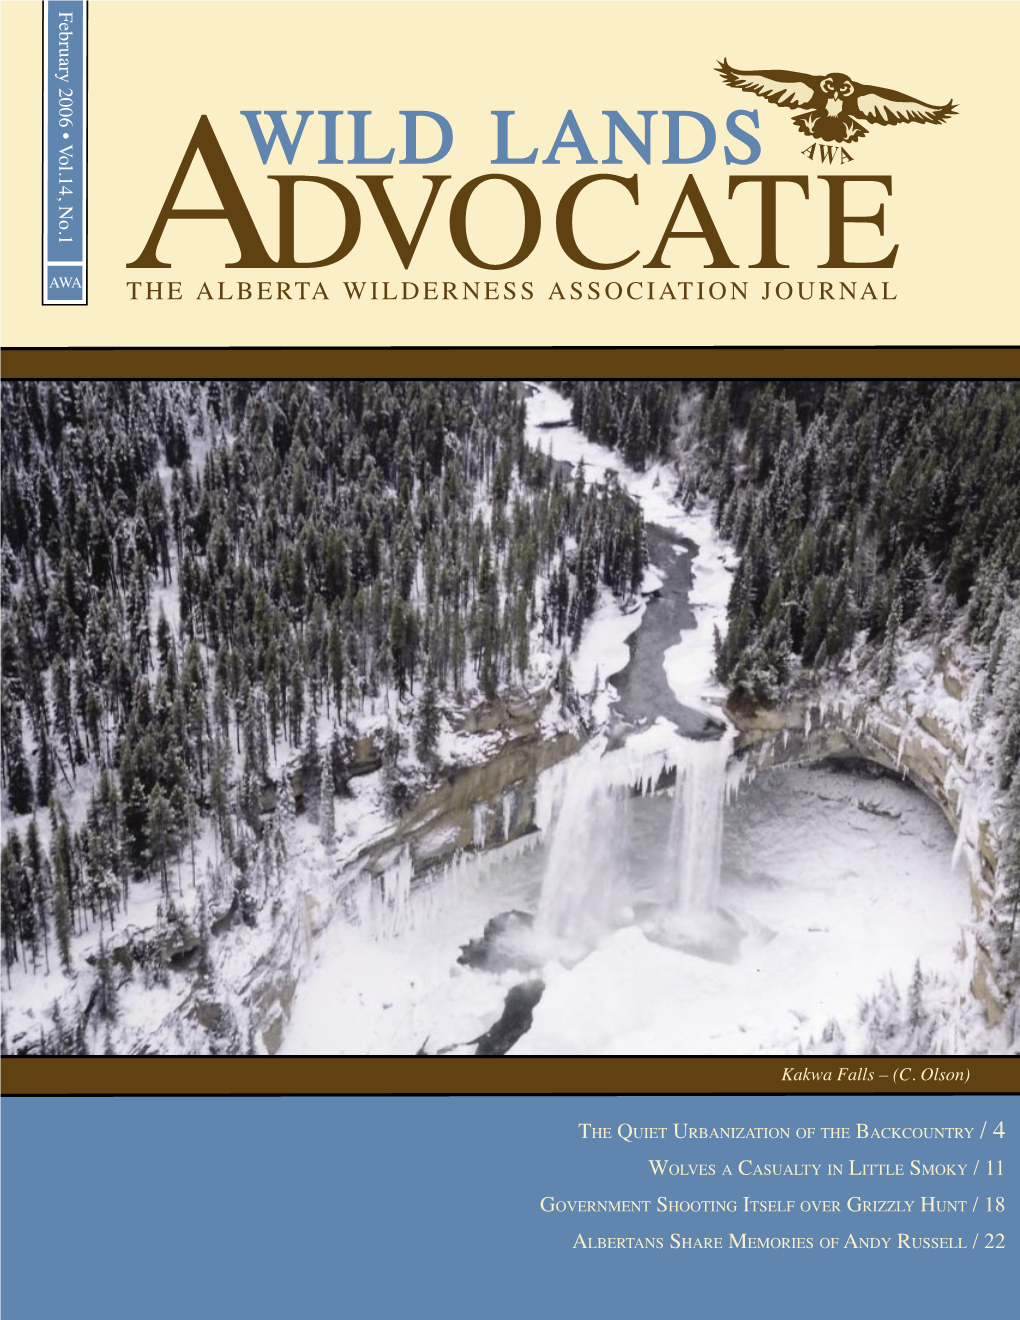 Wild Lands Advocate Vol. 14, No. 1, February 2006